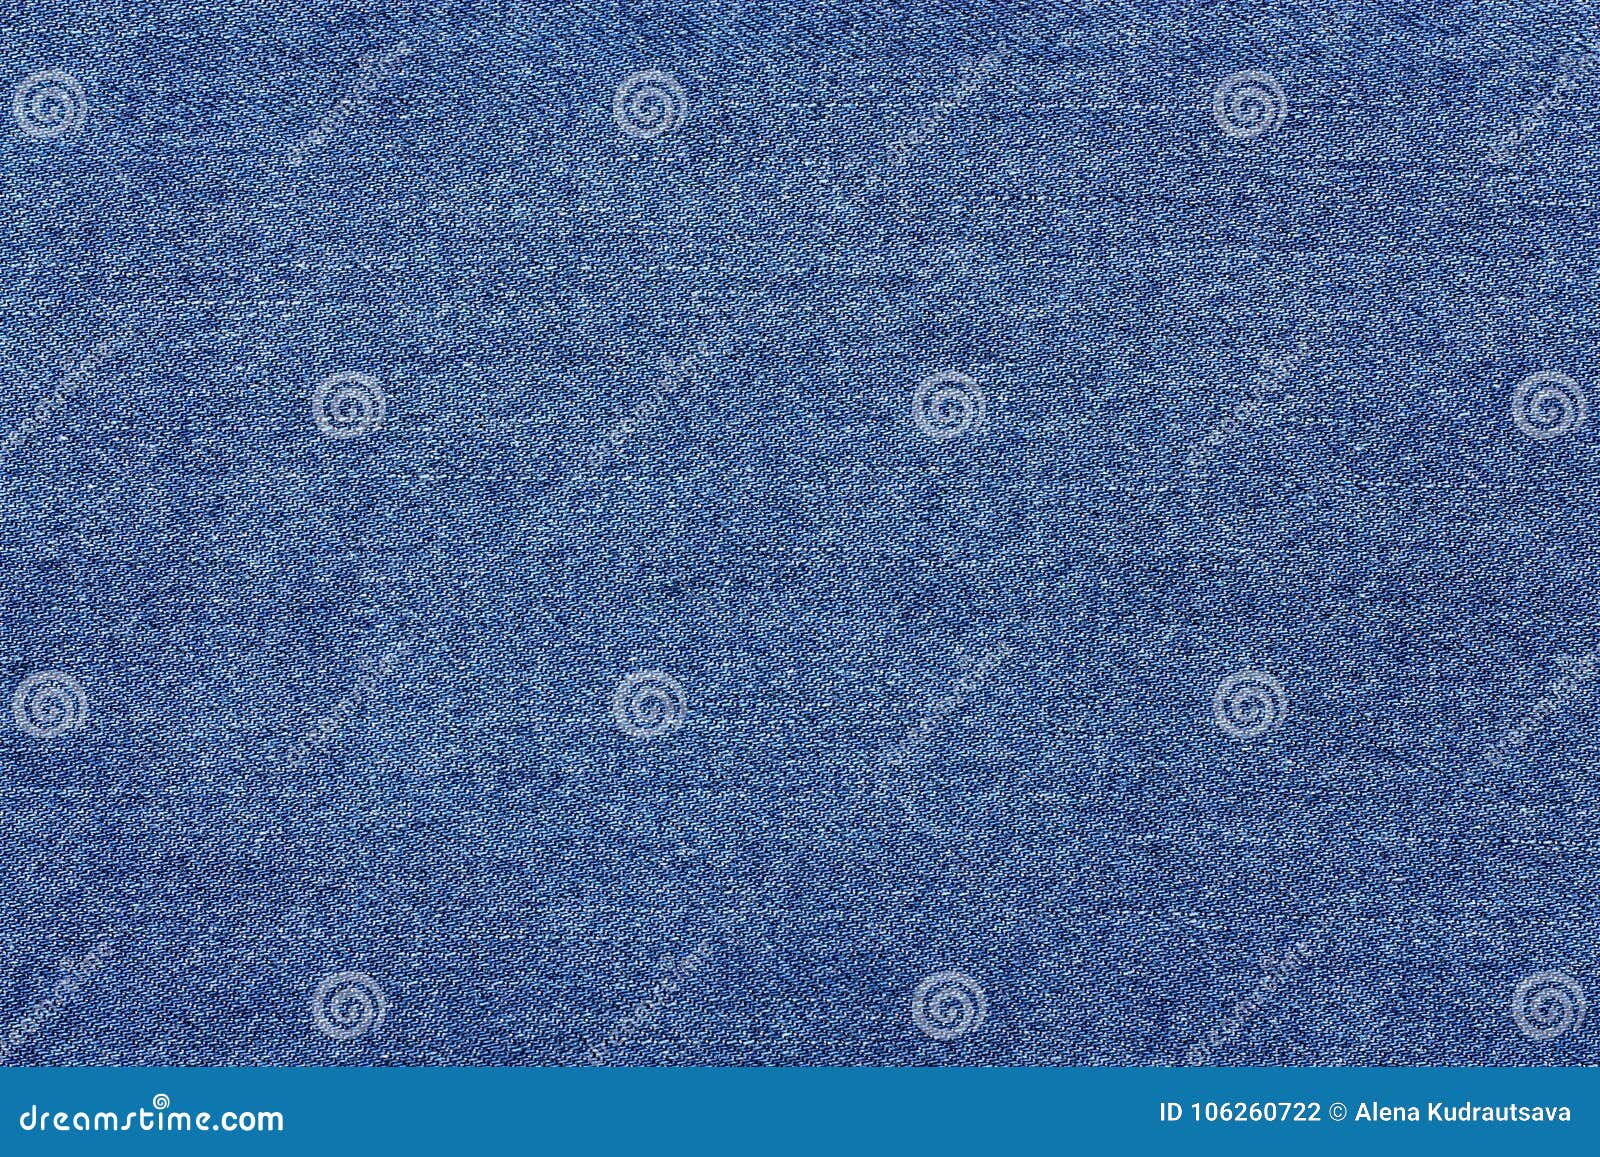 blue jeans texture. denim fabric background.